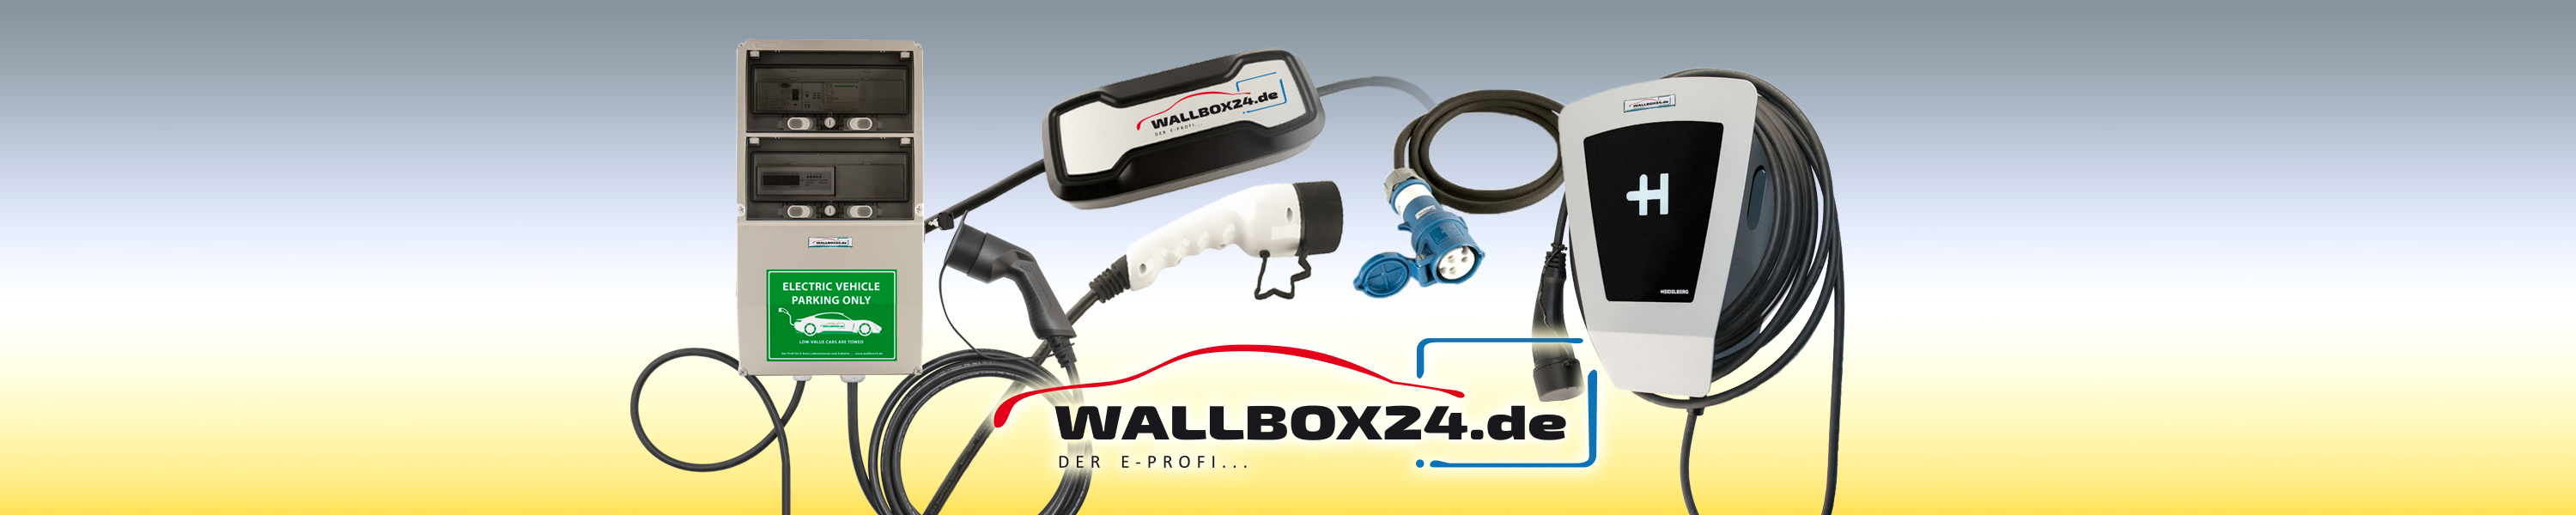 Wallbox24.de